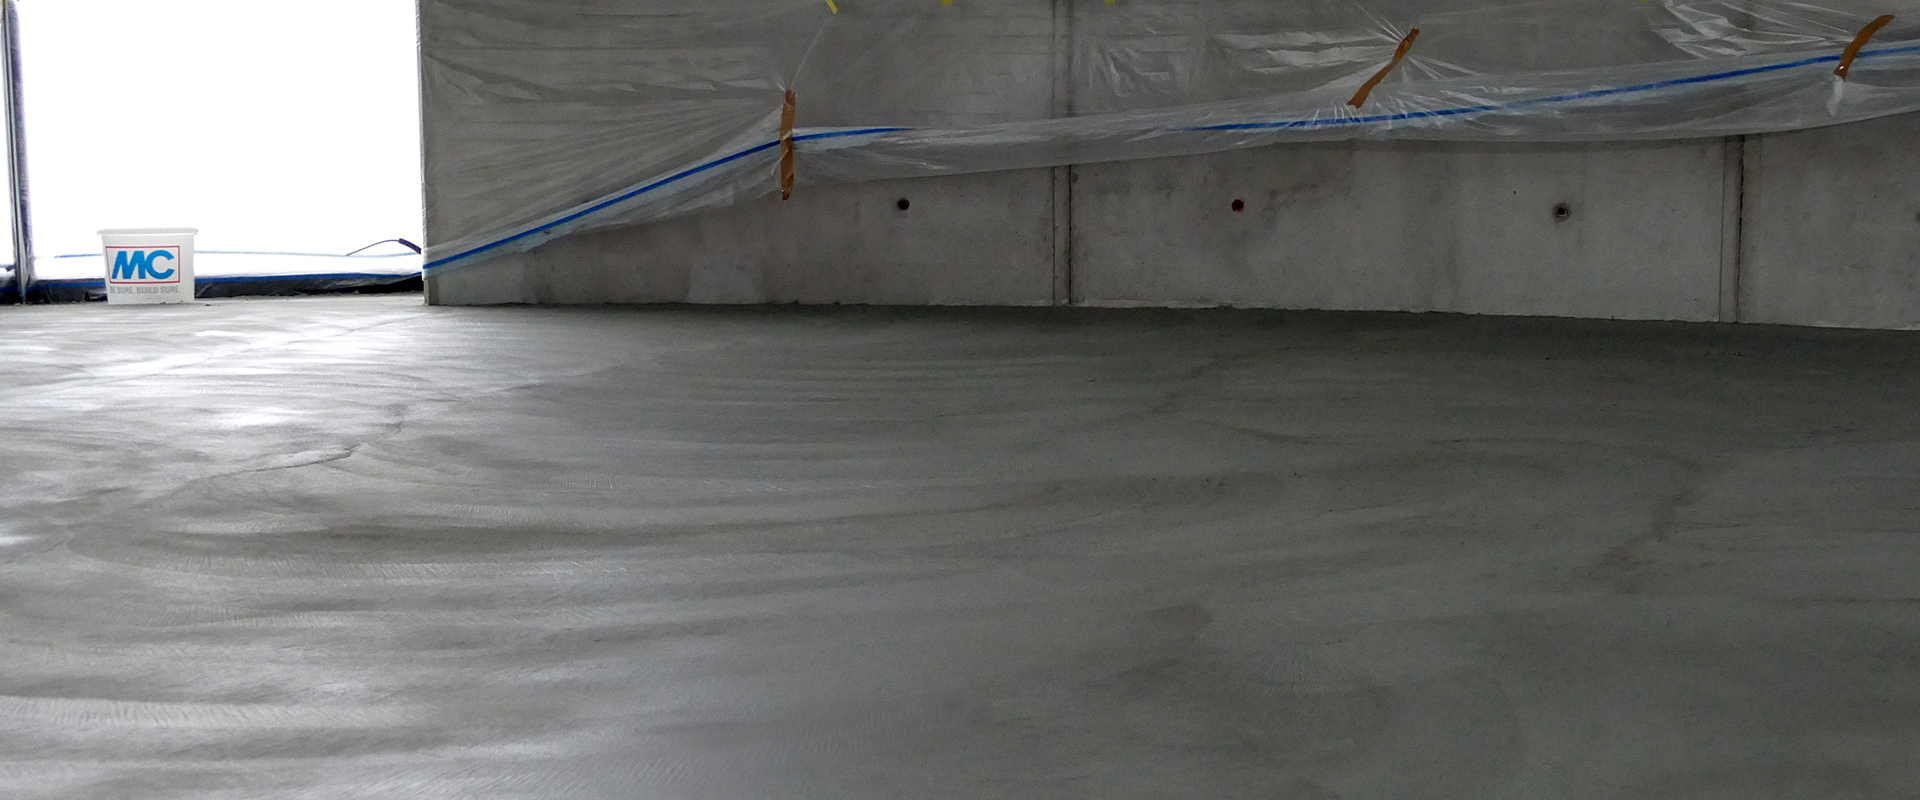 Emcefix floor confirmed resistant to de-icing salts and as an R3 mortar per EN 1504-3